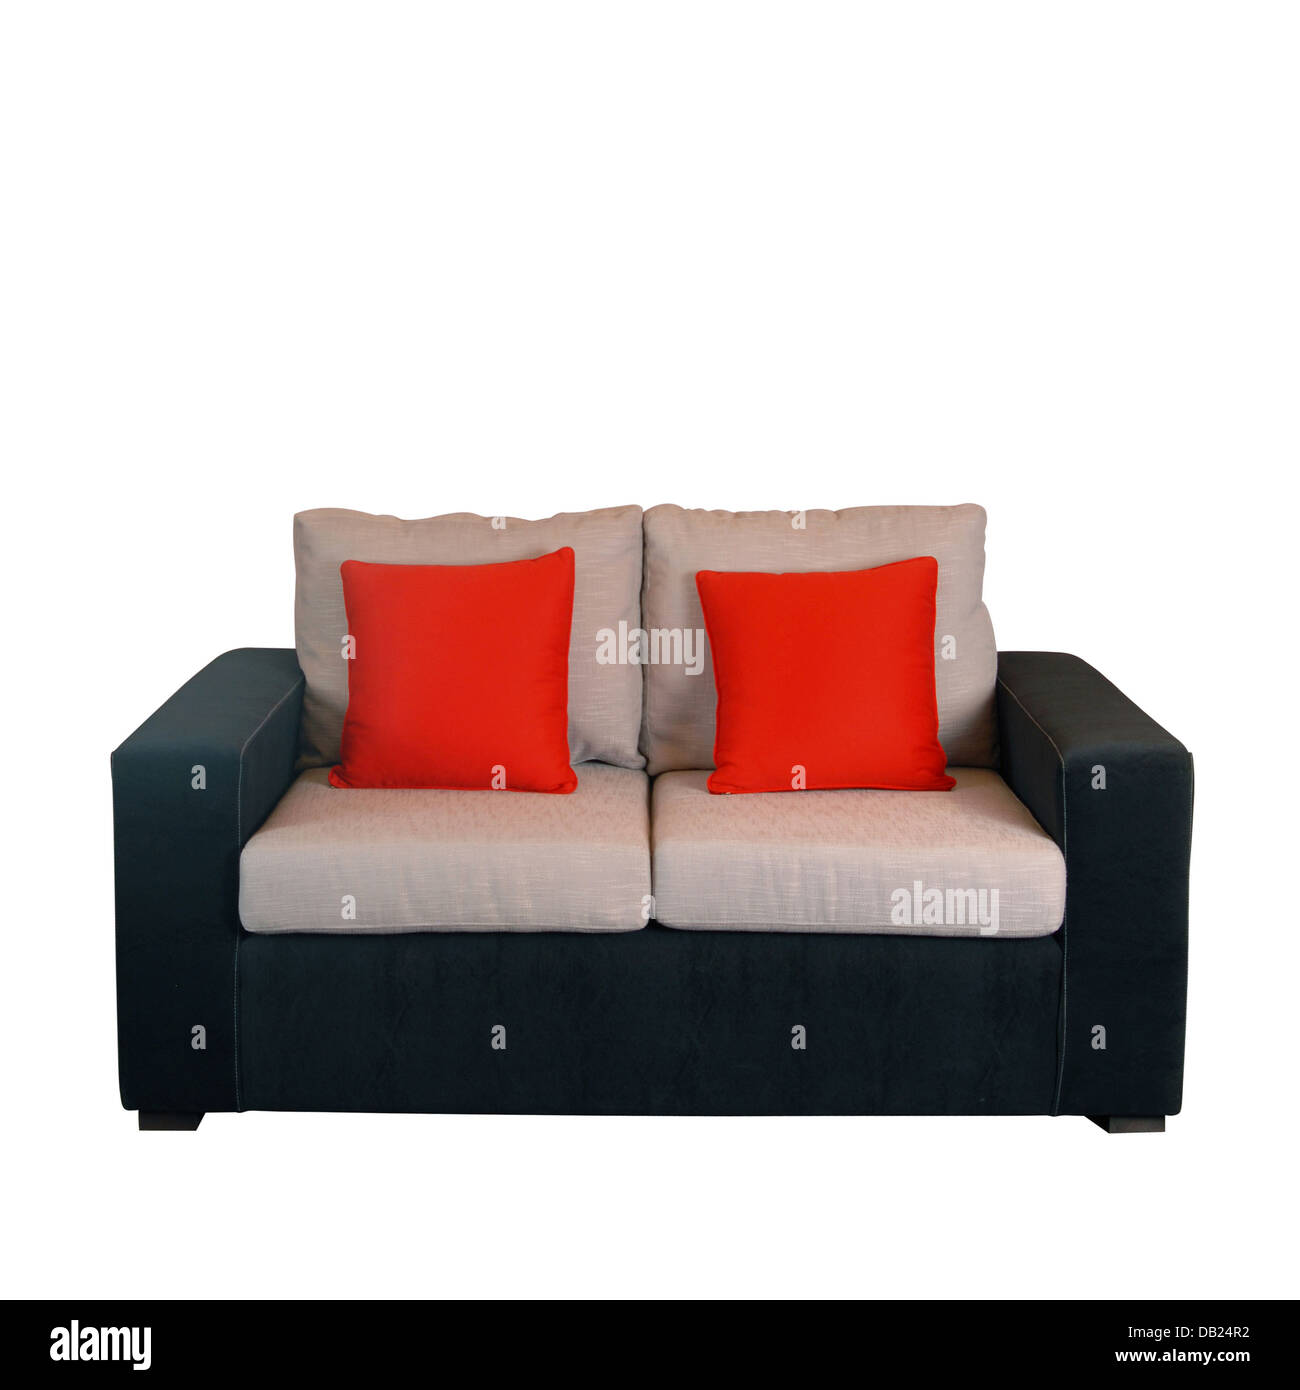 Warhol armchairs Stock Photo